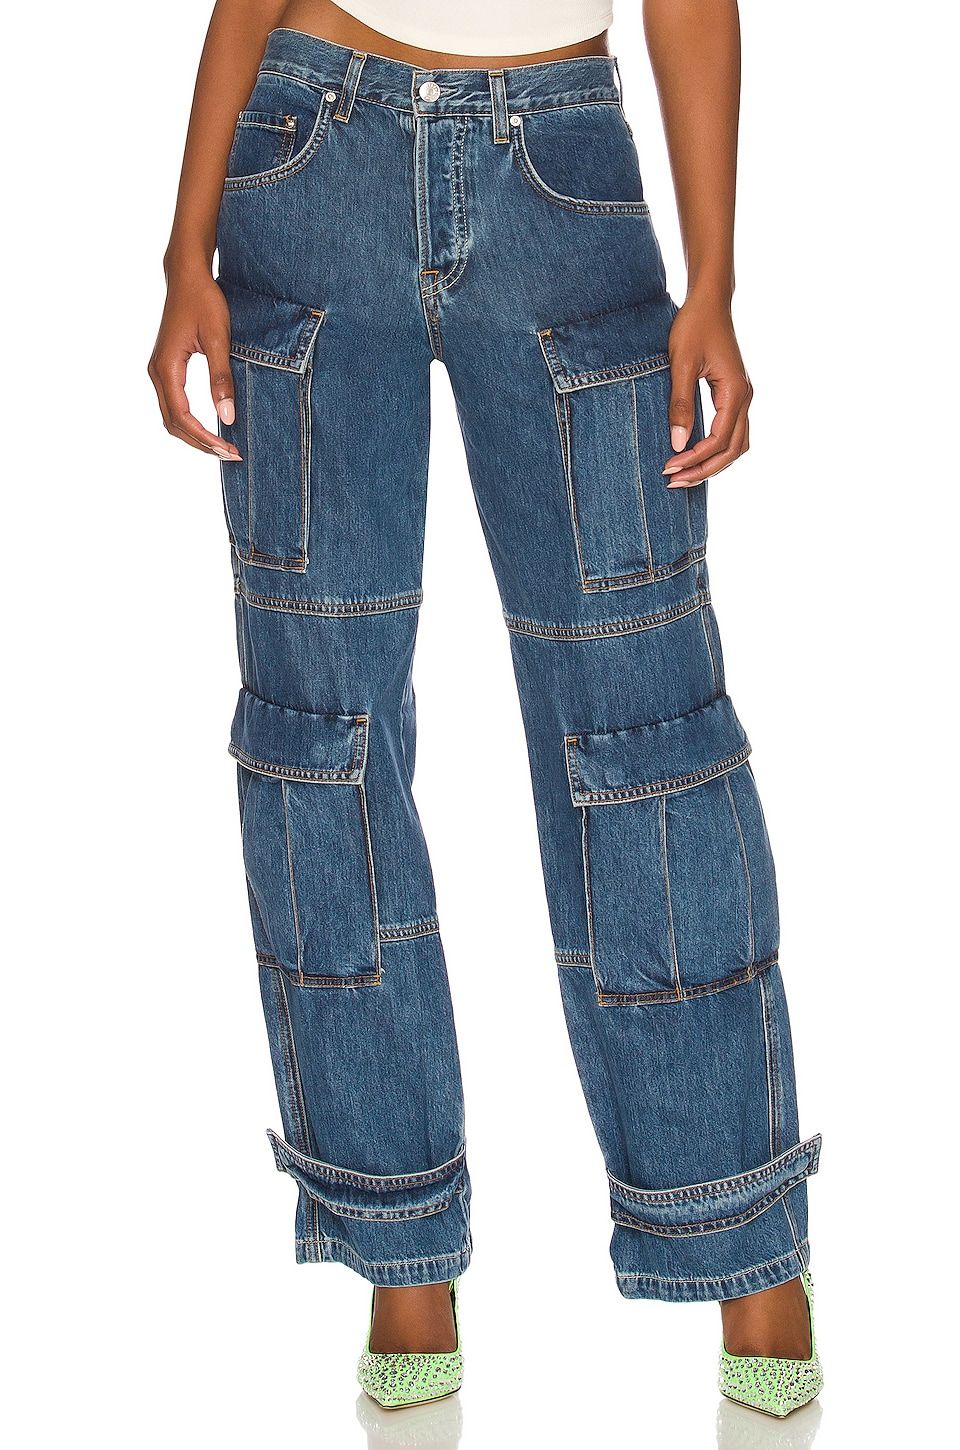 Buy VRM Enterprise Jogger Fit Denim TrousersJeans for Girls  Womens  Trendy and Stylish Regular Fit Womens Jogger Fit Printed Jeans Denim Pant  for Girls Size in Multicolore 26 at Amazonin